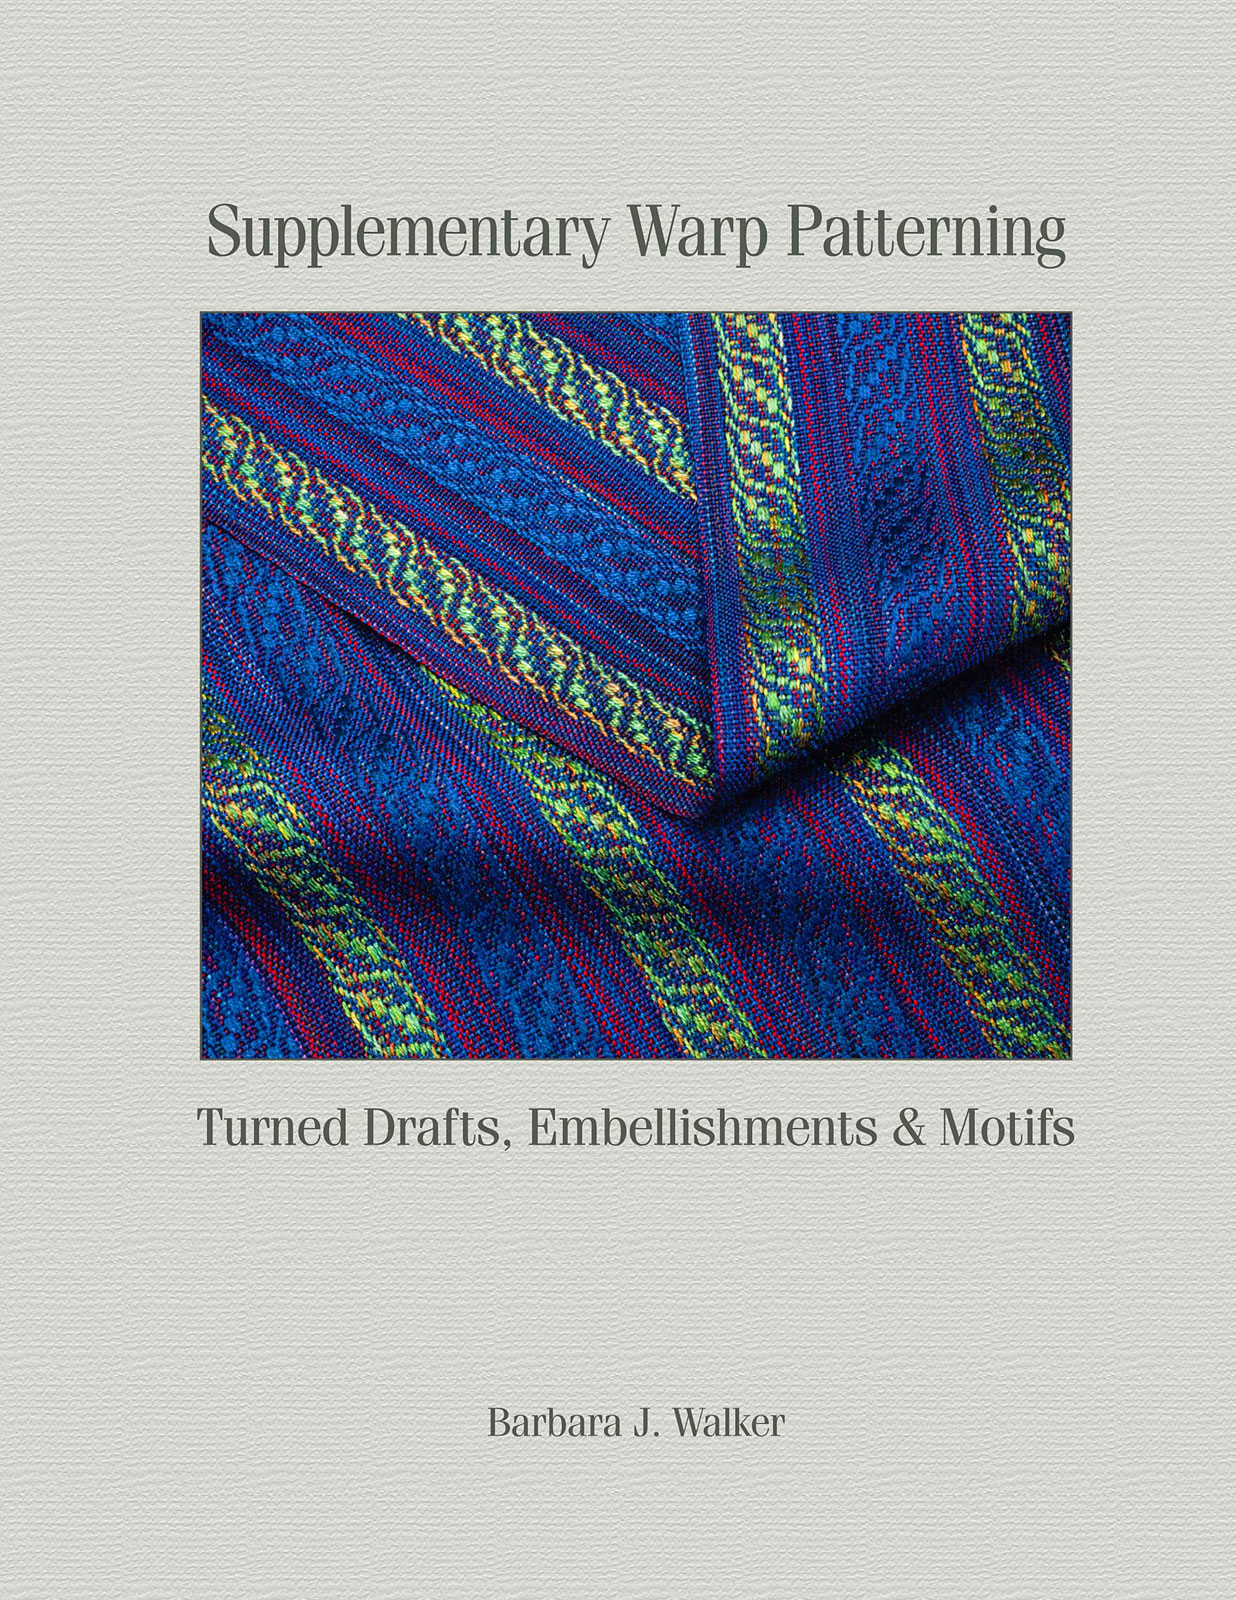 Book - Supplementary Warp Patterning: Turned Drafts, Embellishments & Motifs By Barbara J. Walker